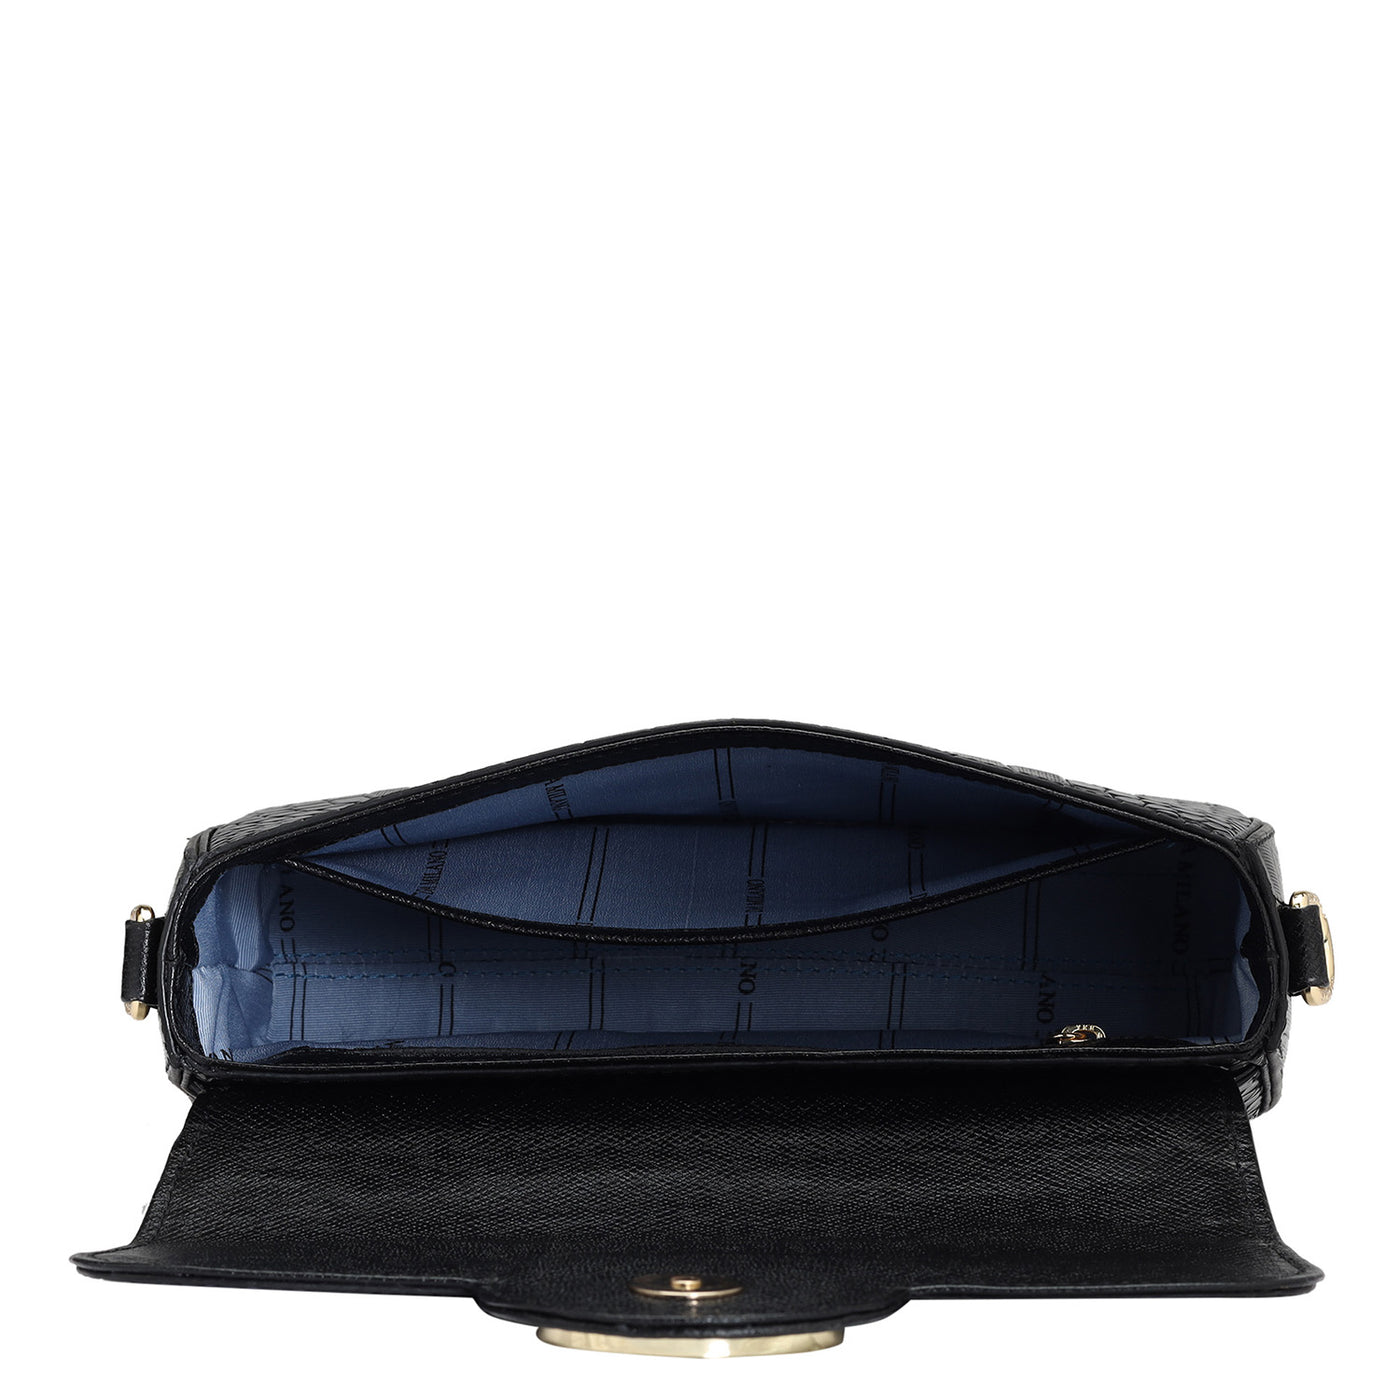 Small Croco Leather Shoulder Bag - Black